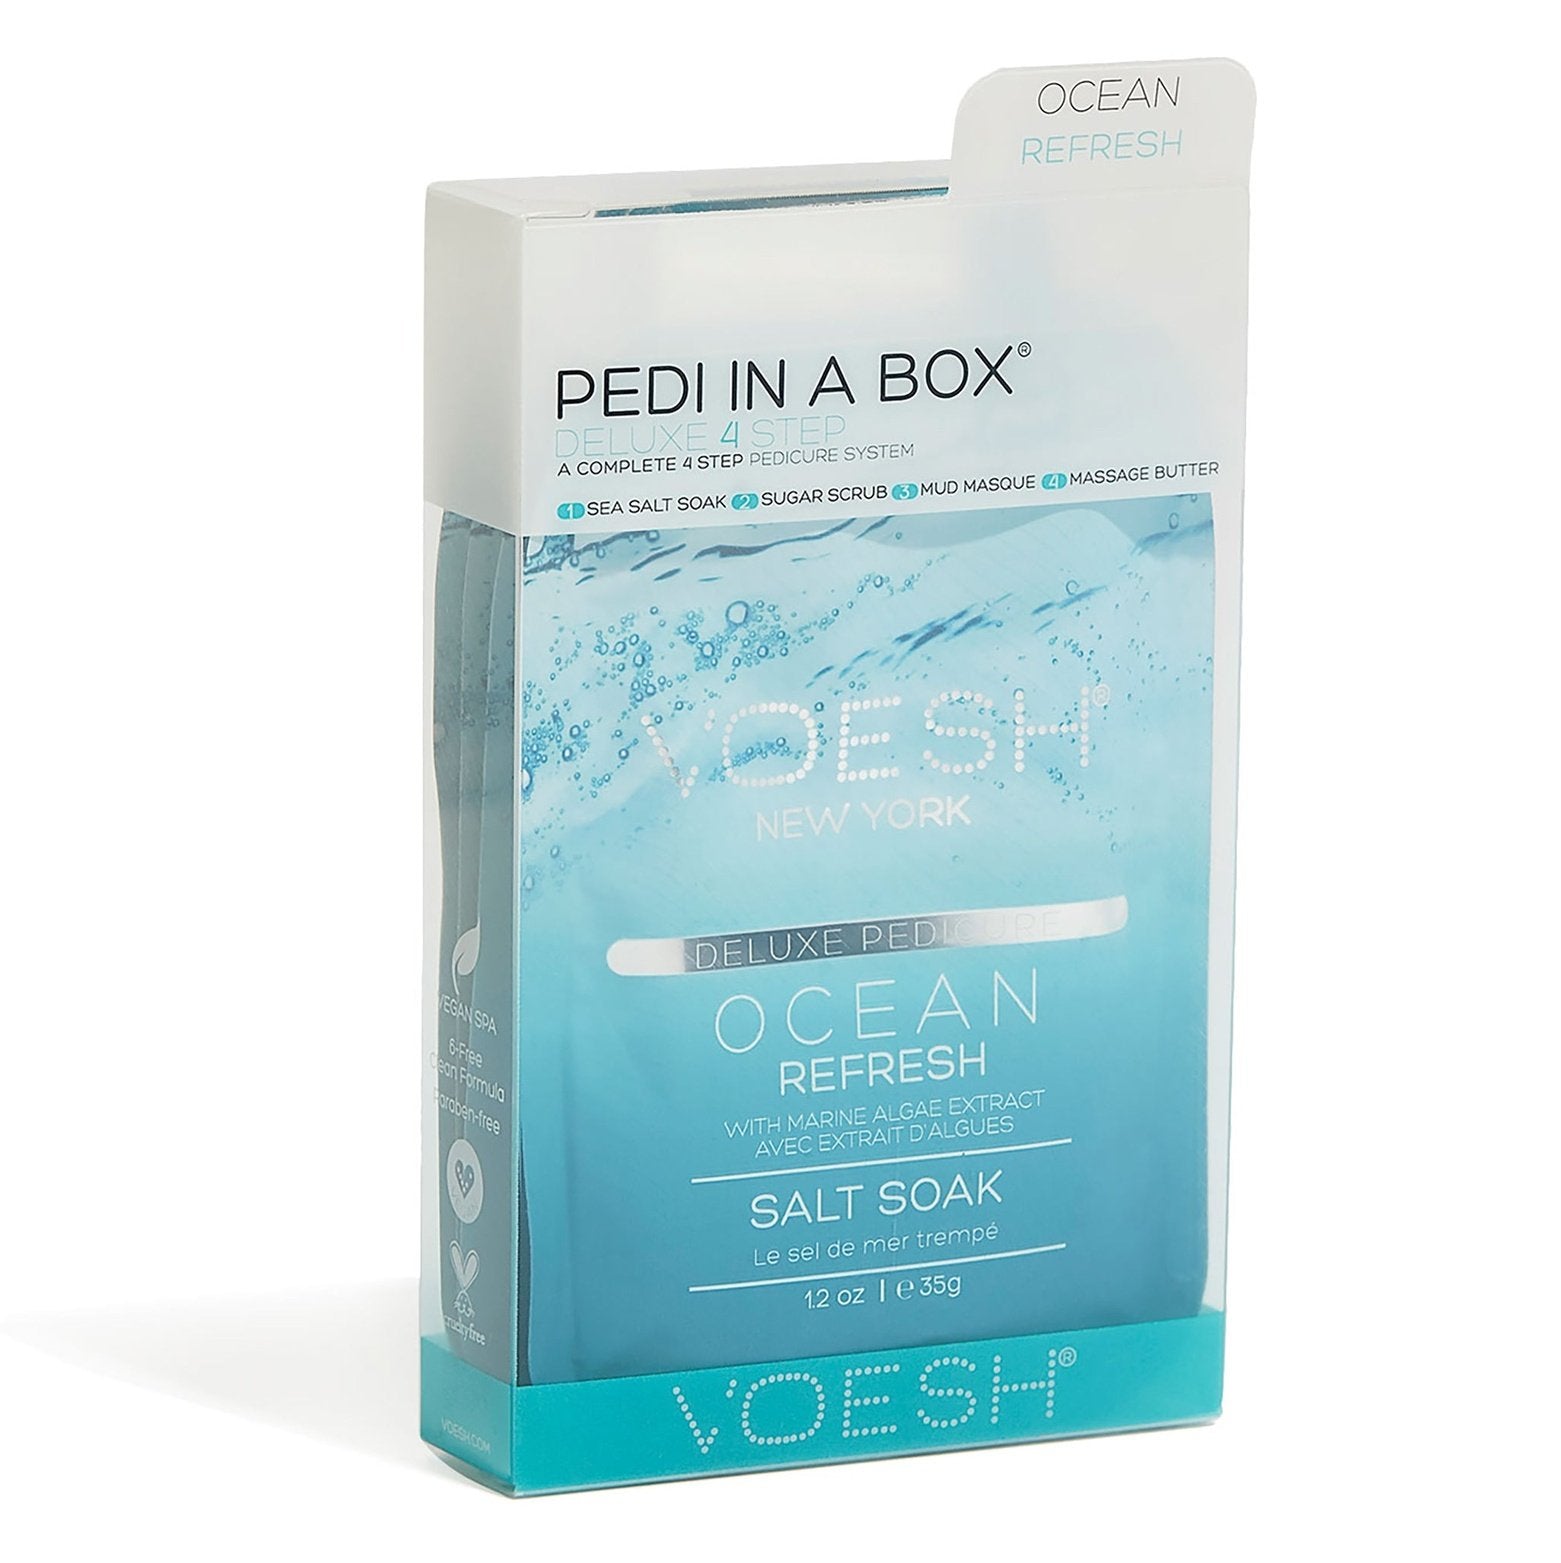 Voesh - Pedi in a Box Deluxe 4 Step | Ocean Refresh - Pack